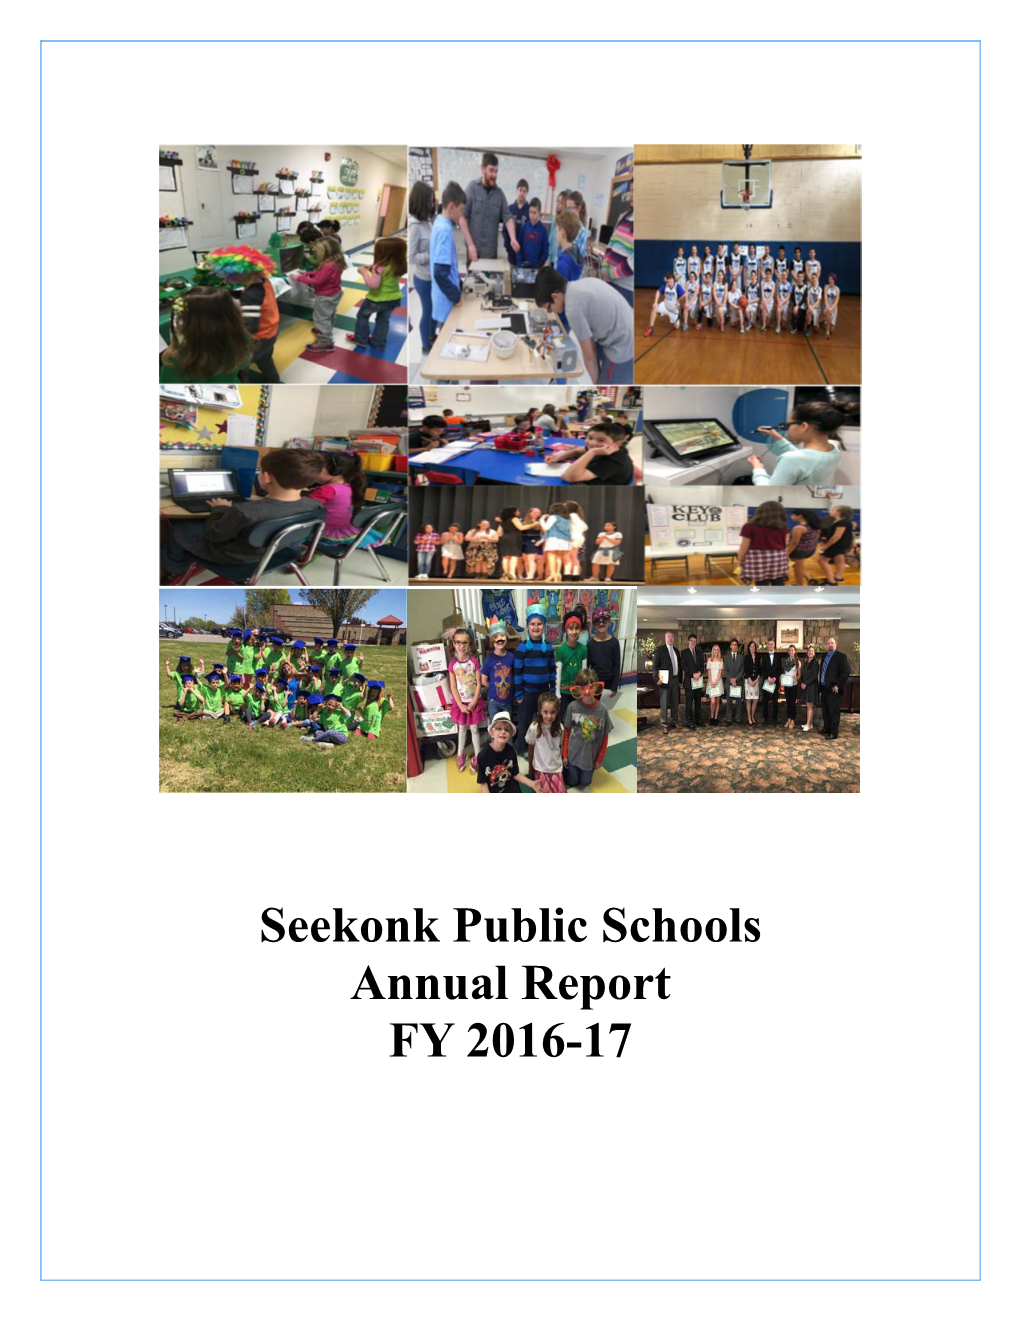 Seekonk Public Schools Annual Report FY 2016-17